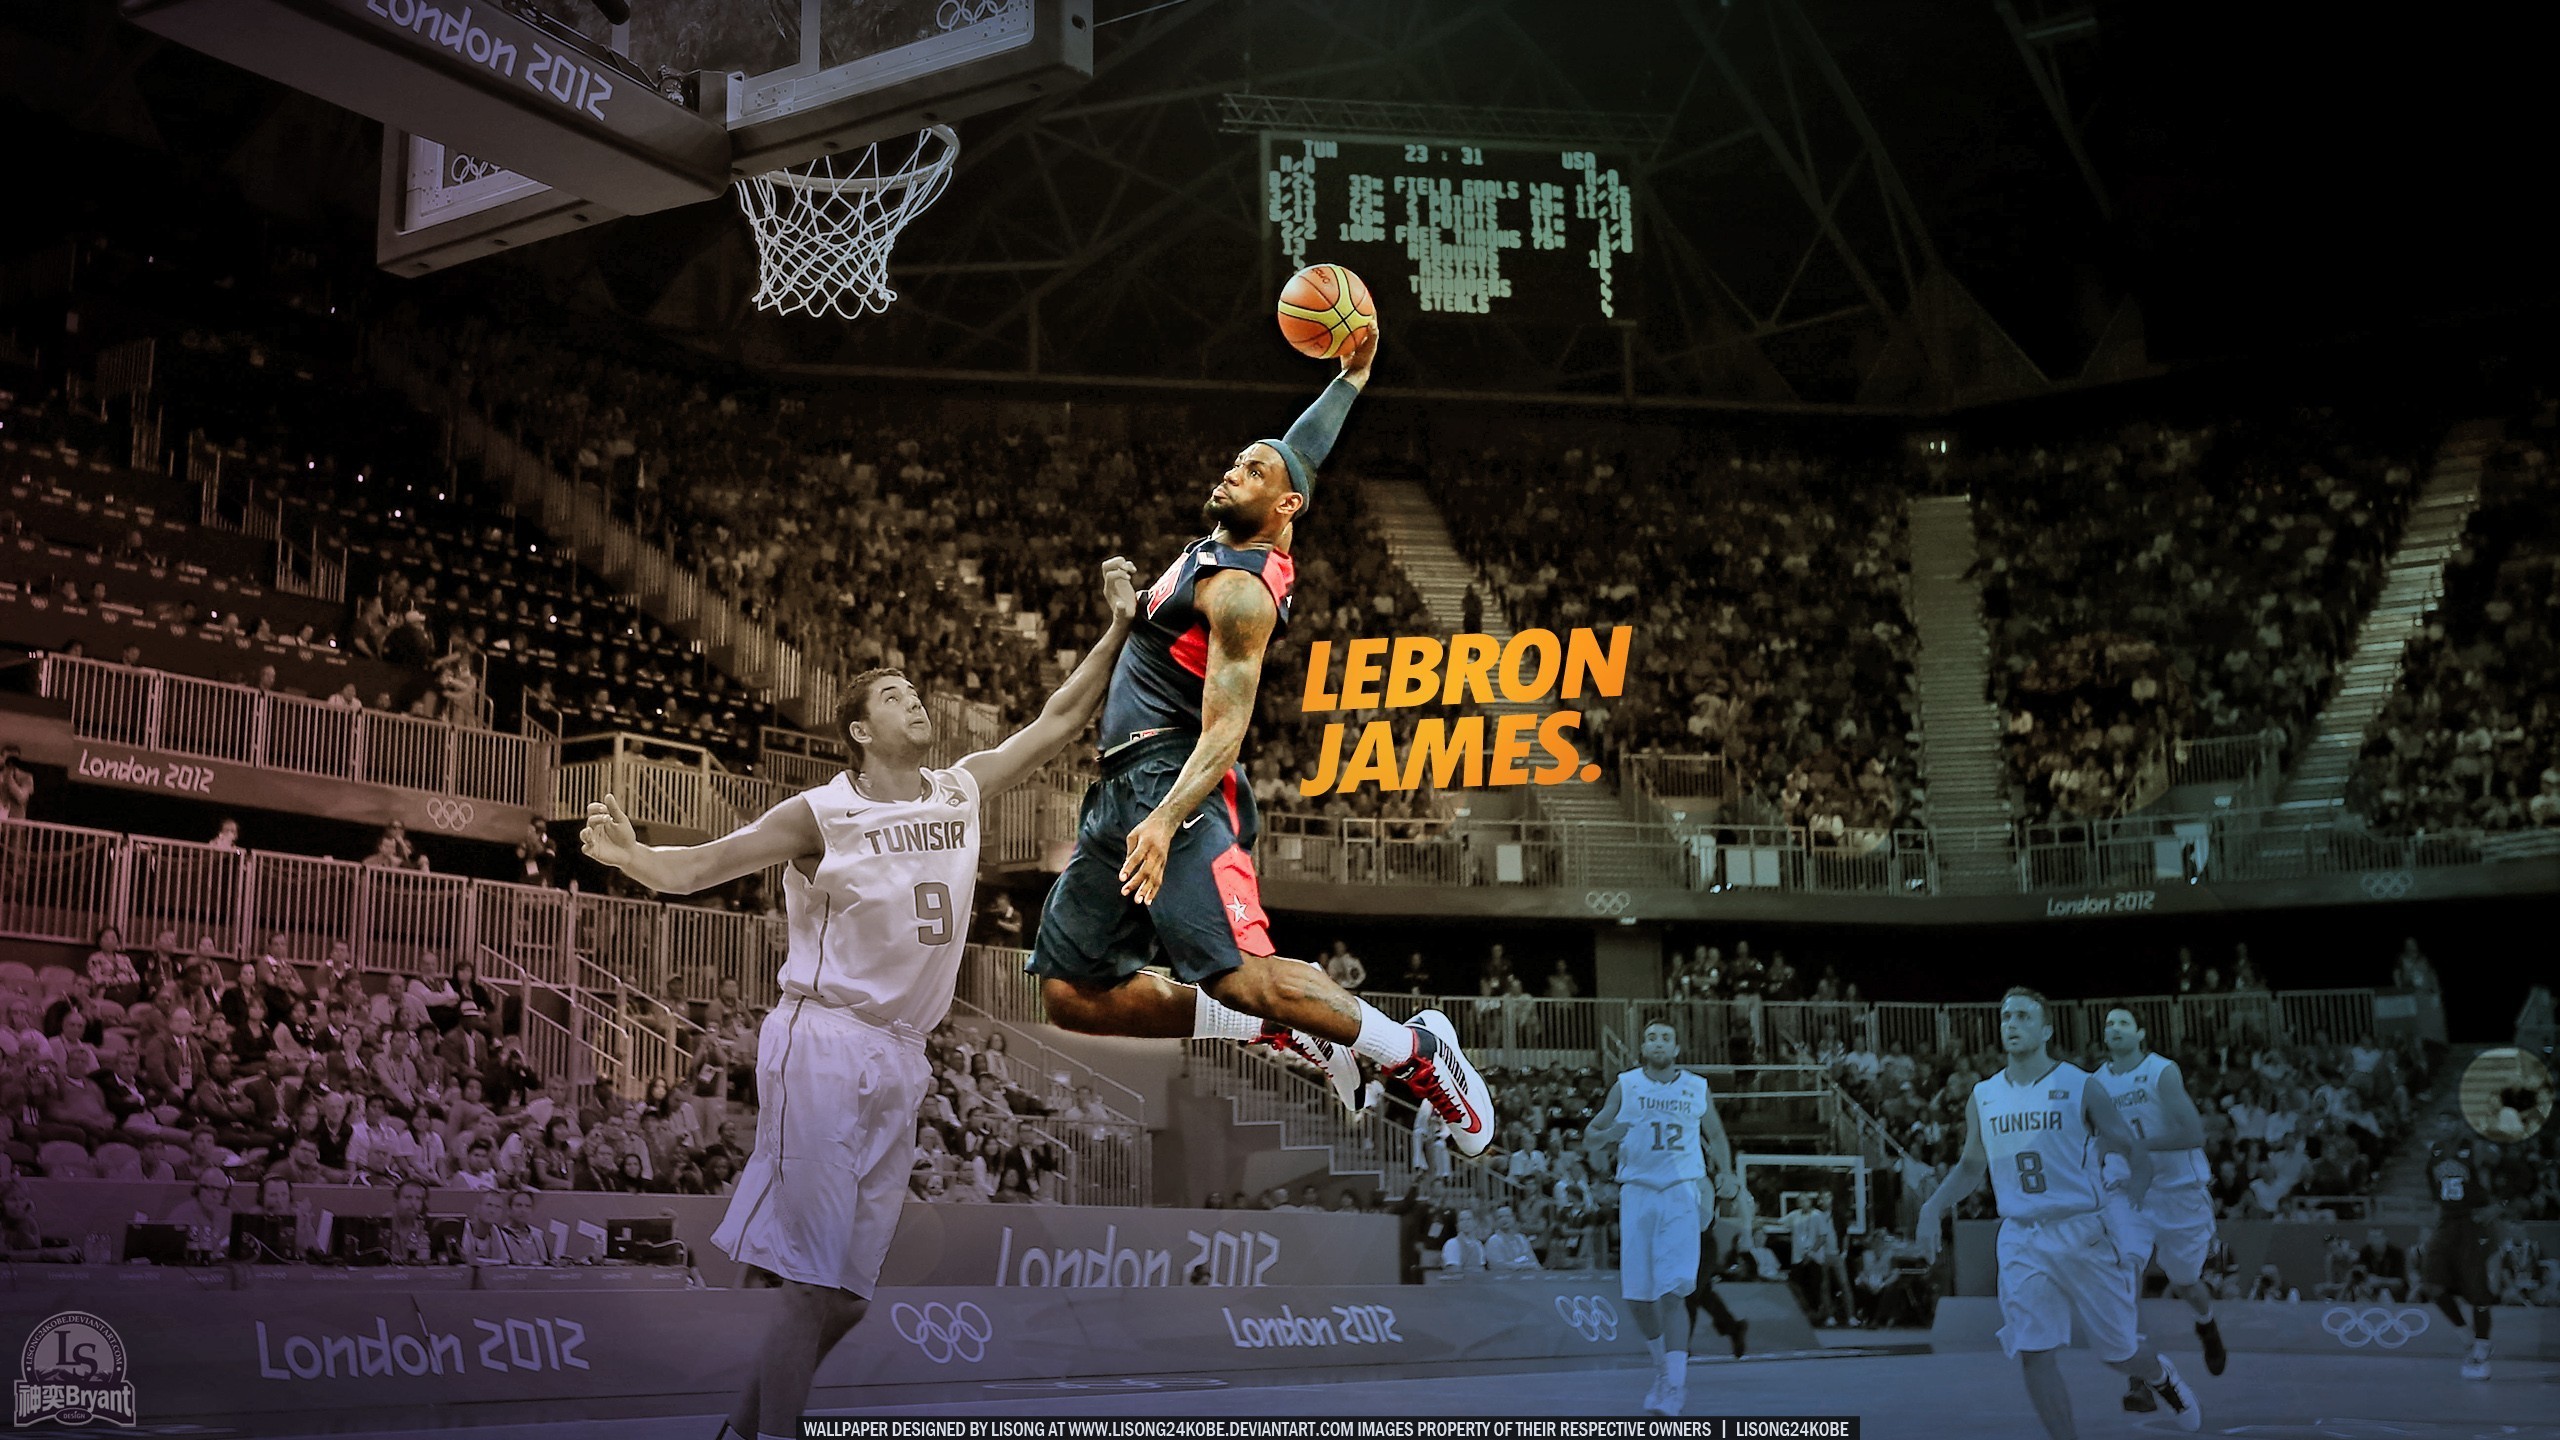 2560x1440 Nba lebron james dunk basketball player wallpaper